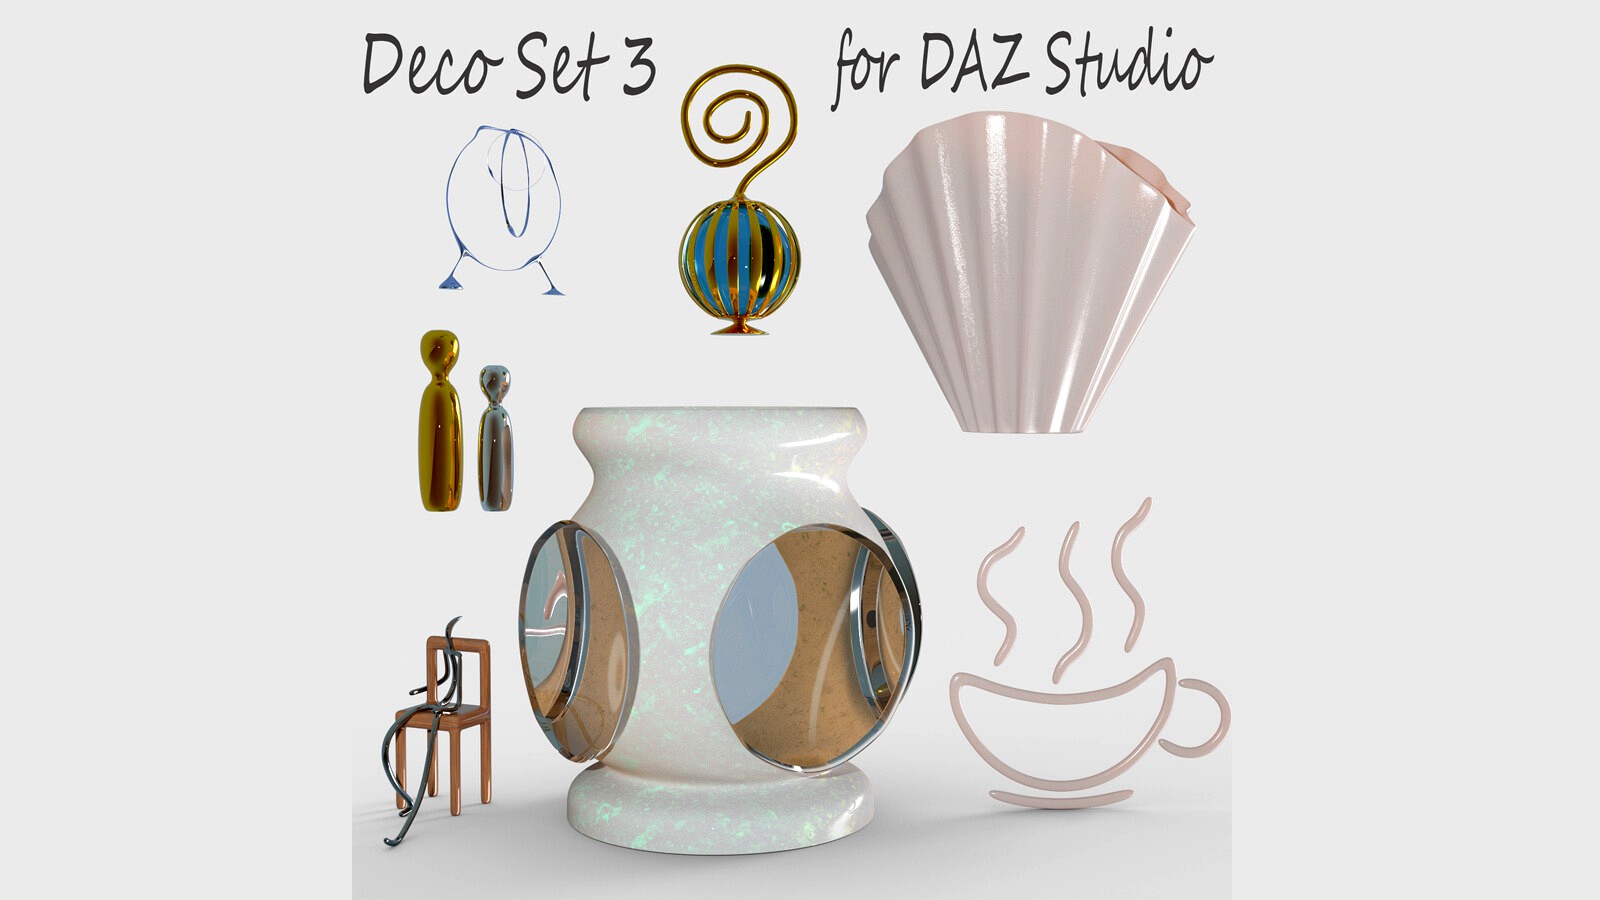 Deco Set 3 for DAZ Studio